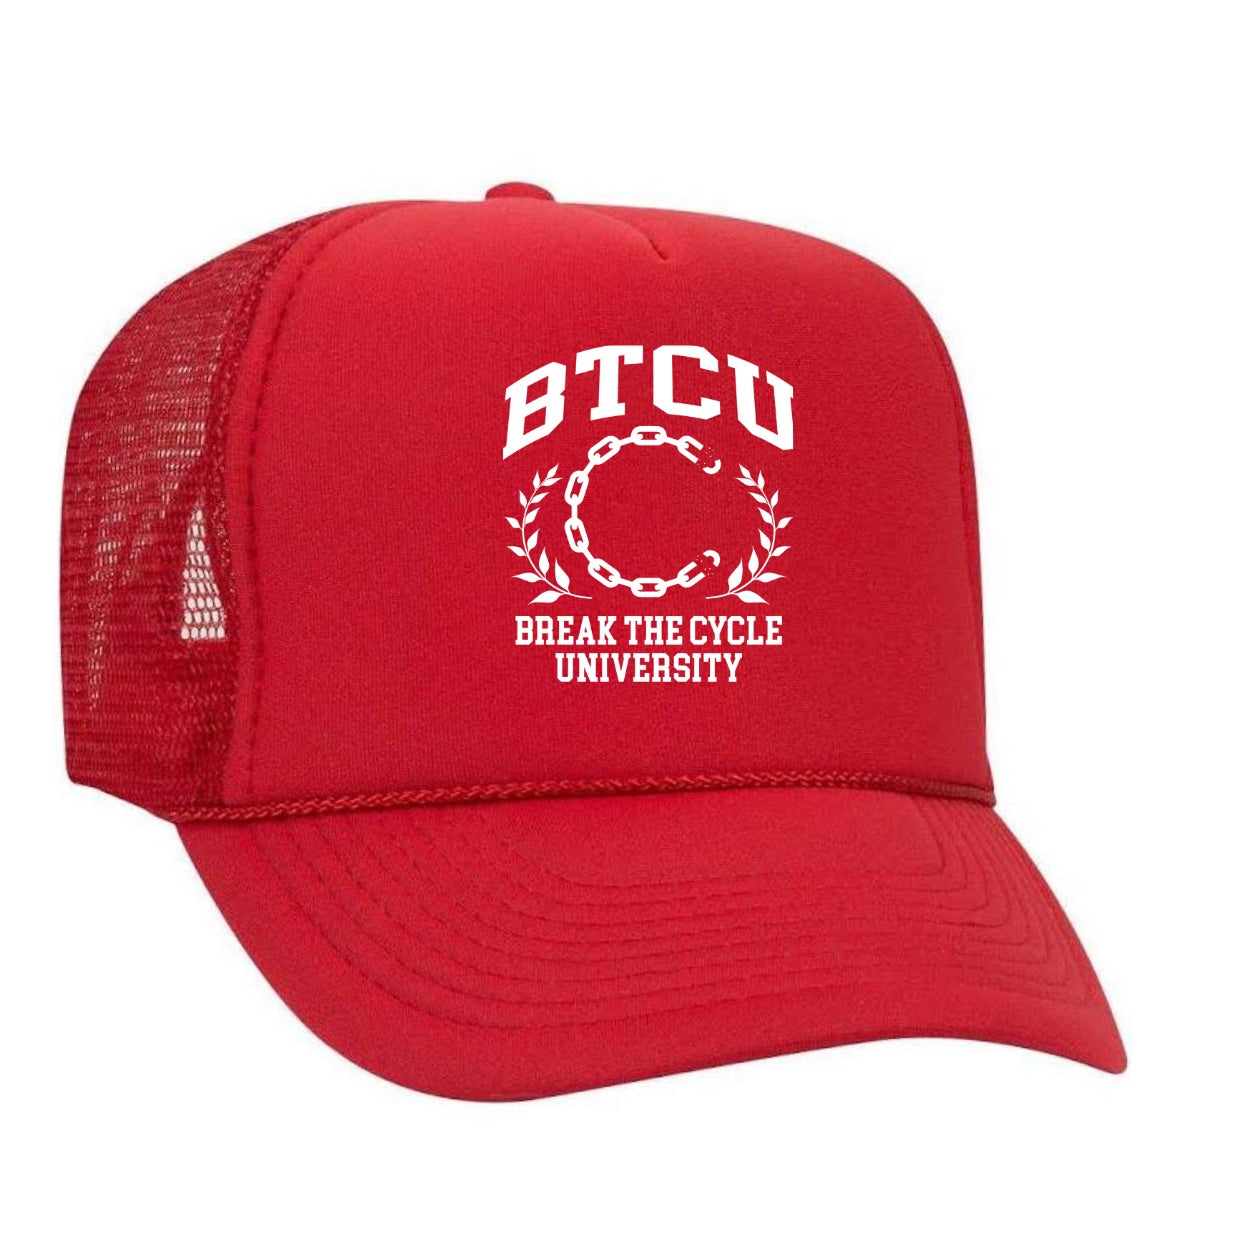 BTC University Red Trucker Hat